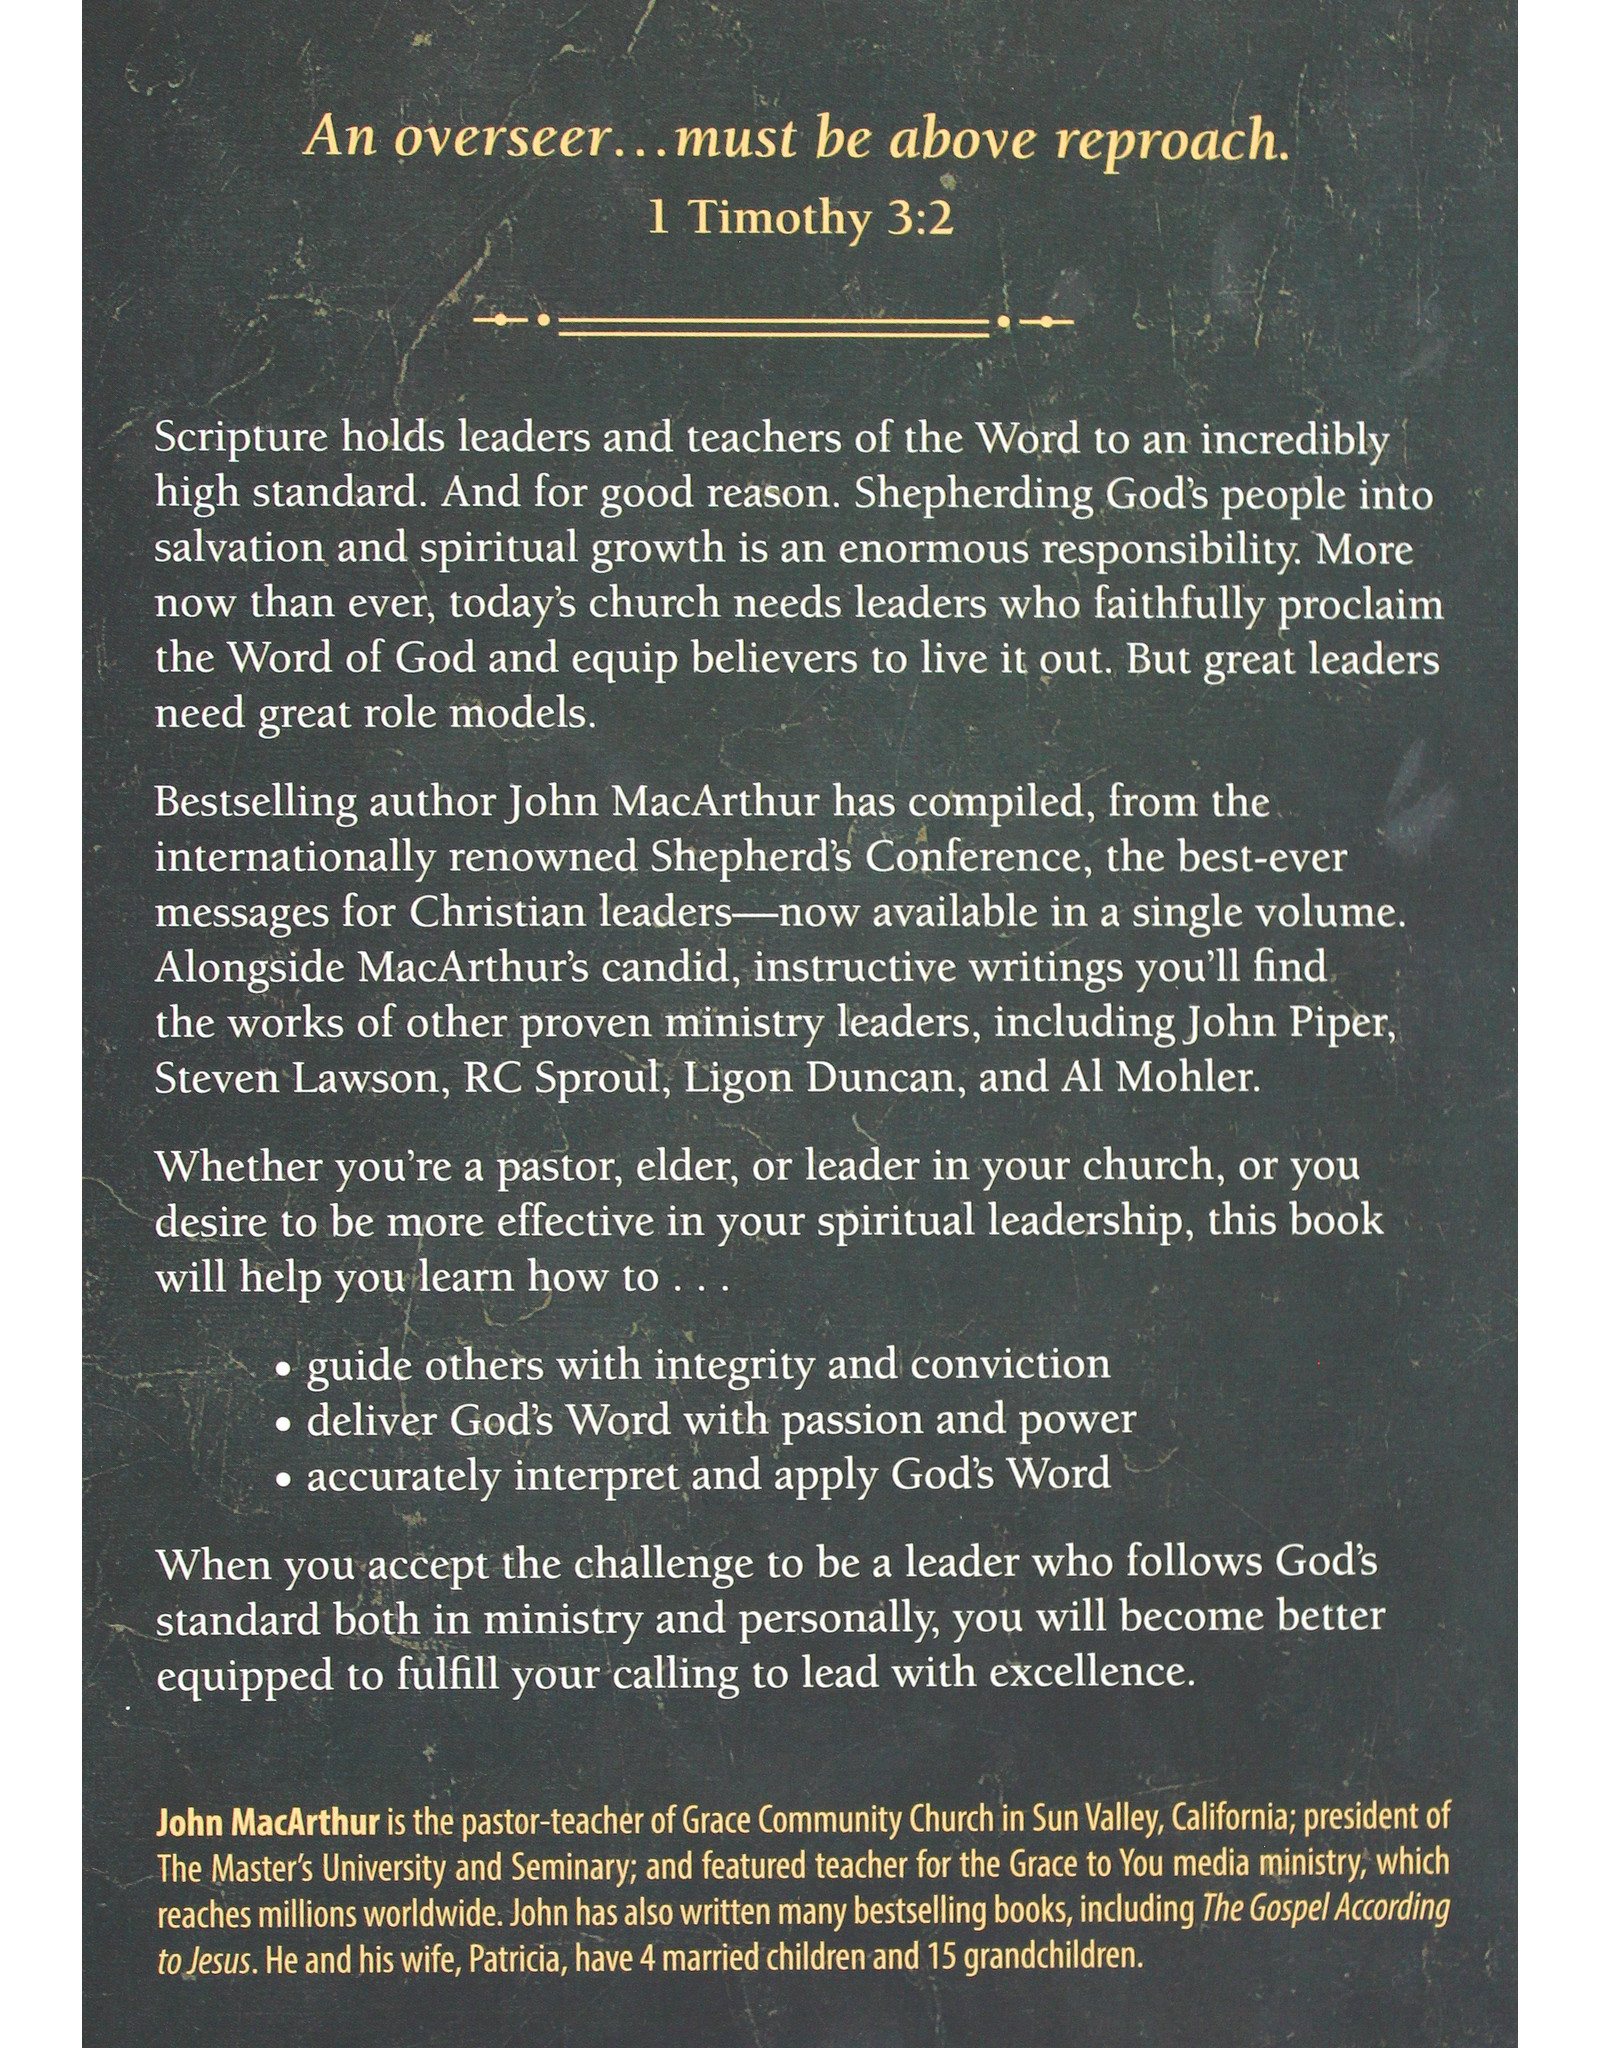 Harvest House Publishers The John MacArthur Handbook of Effective Biblical Leadership